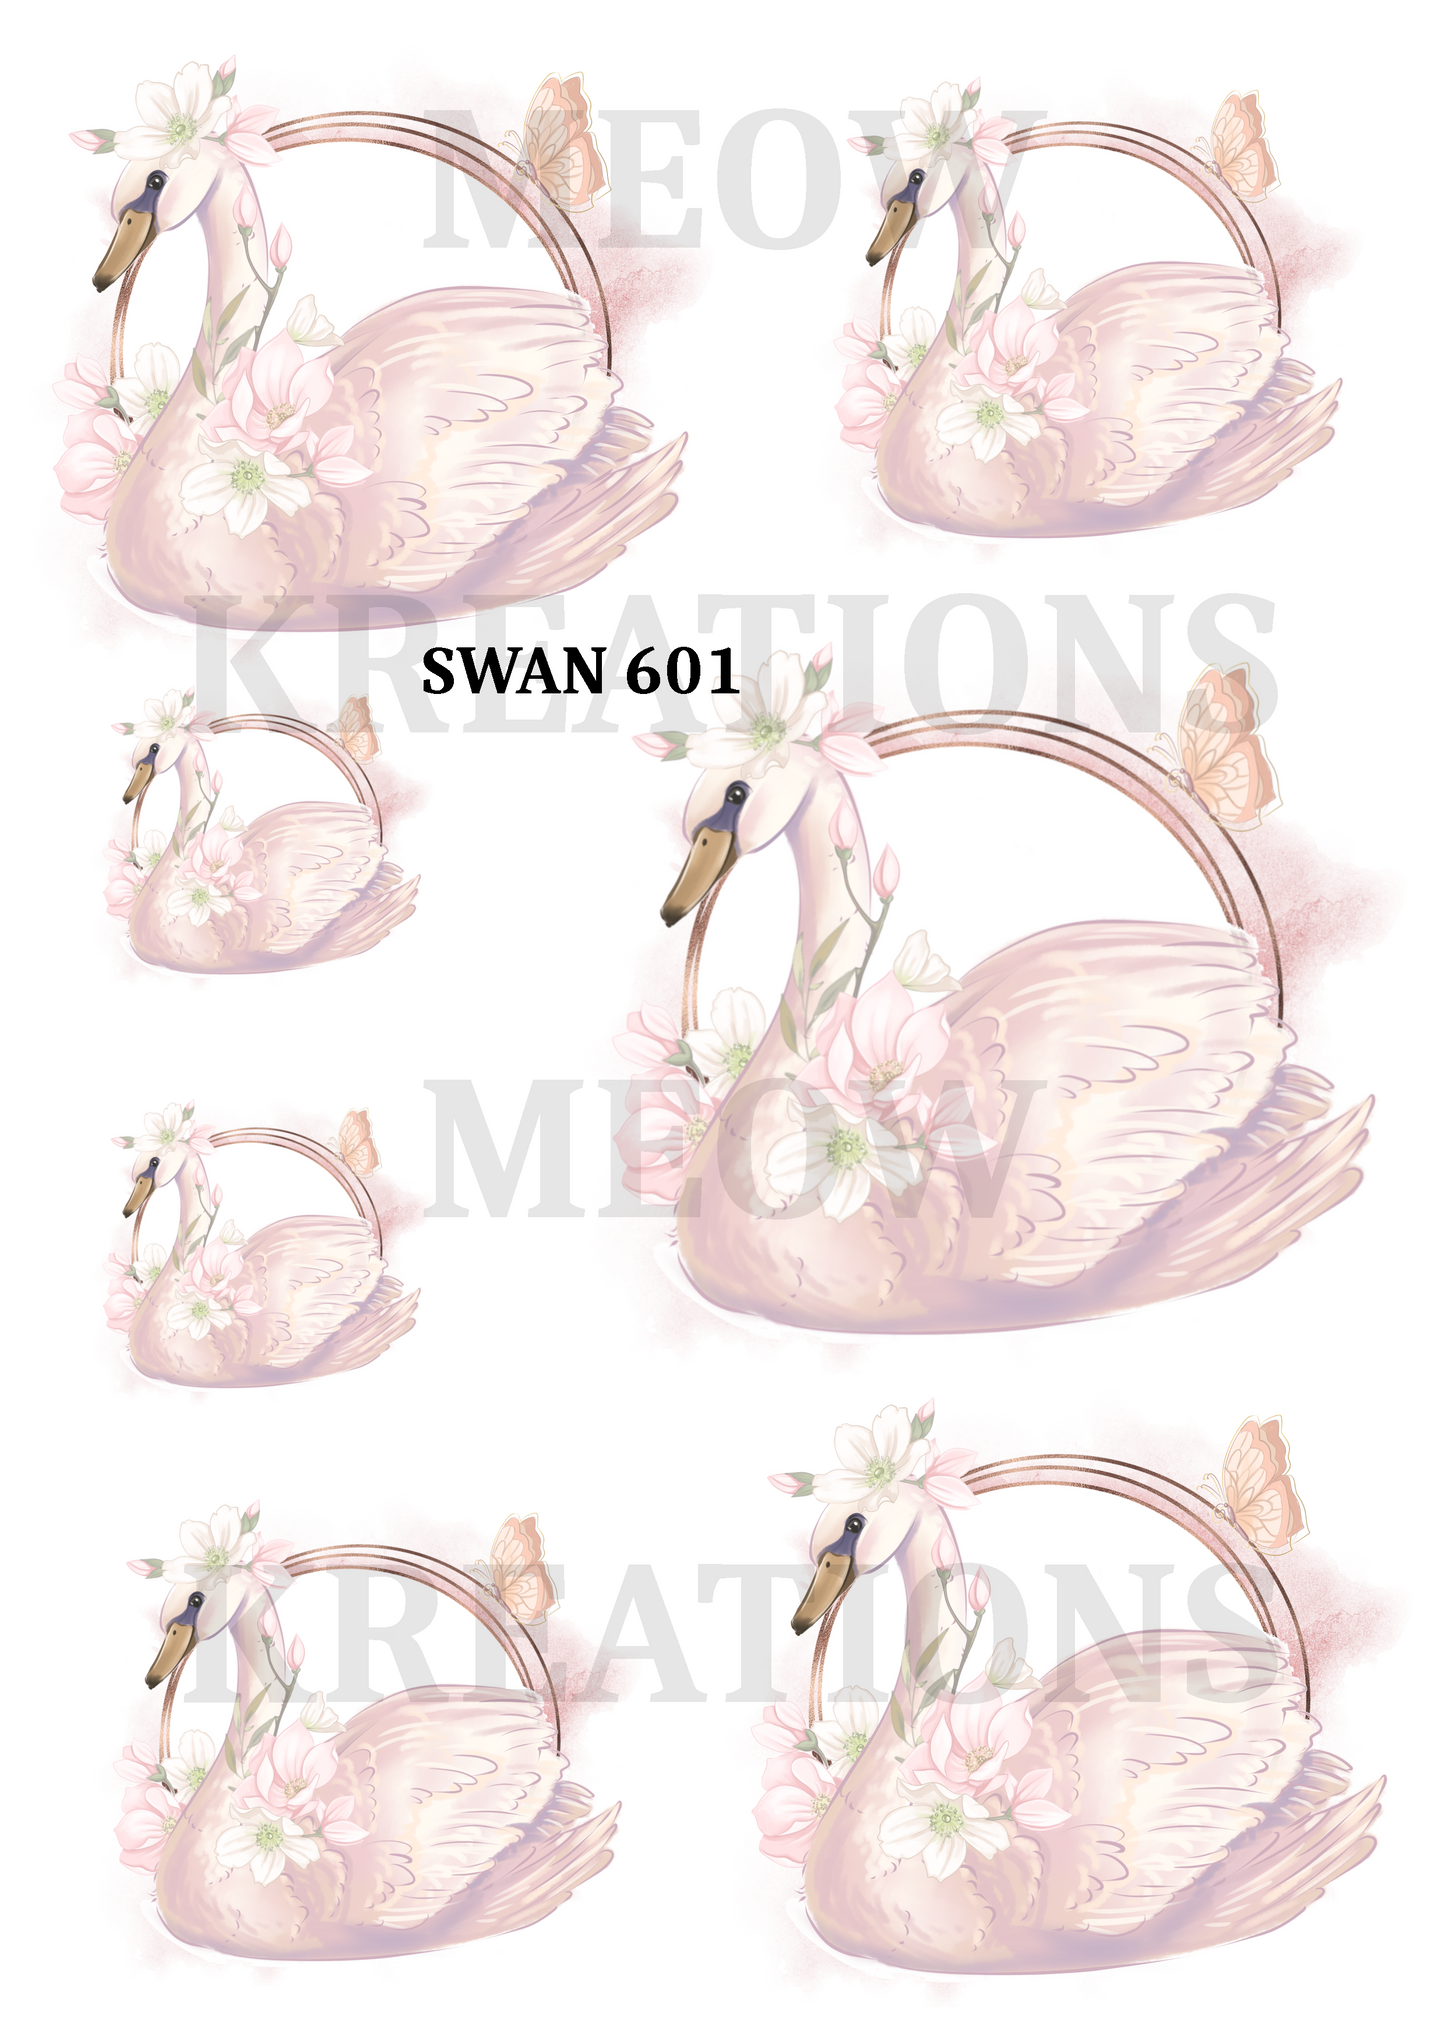 SWAN 601